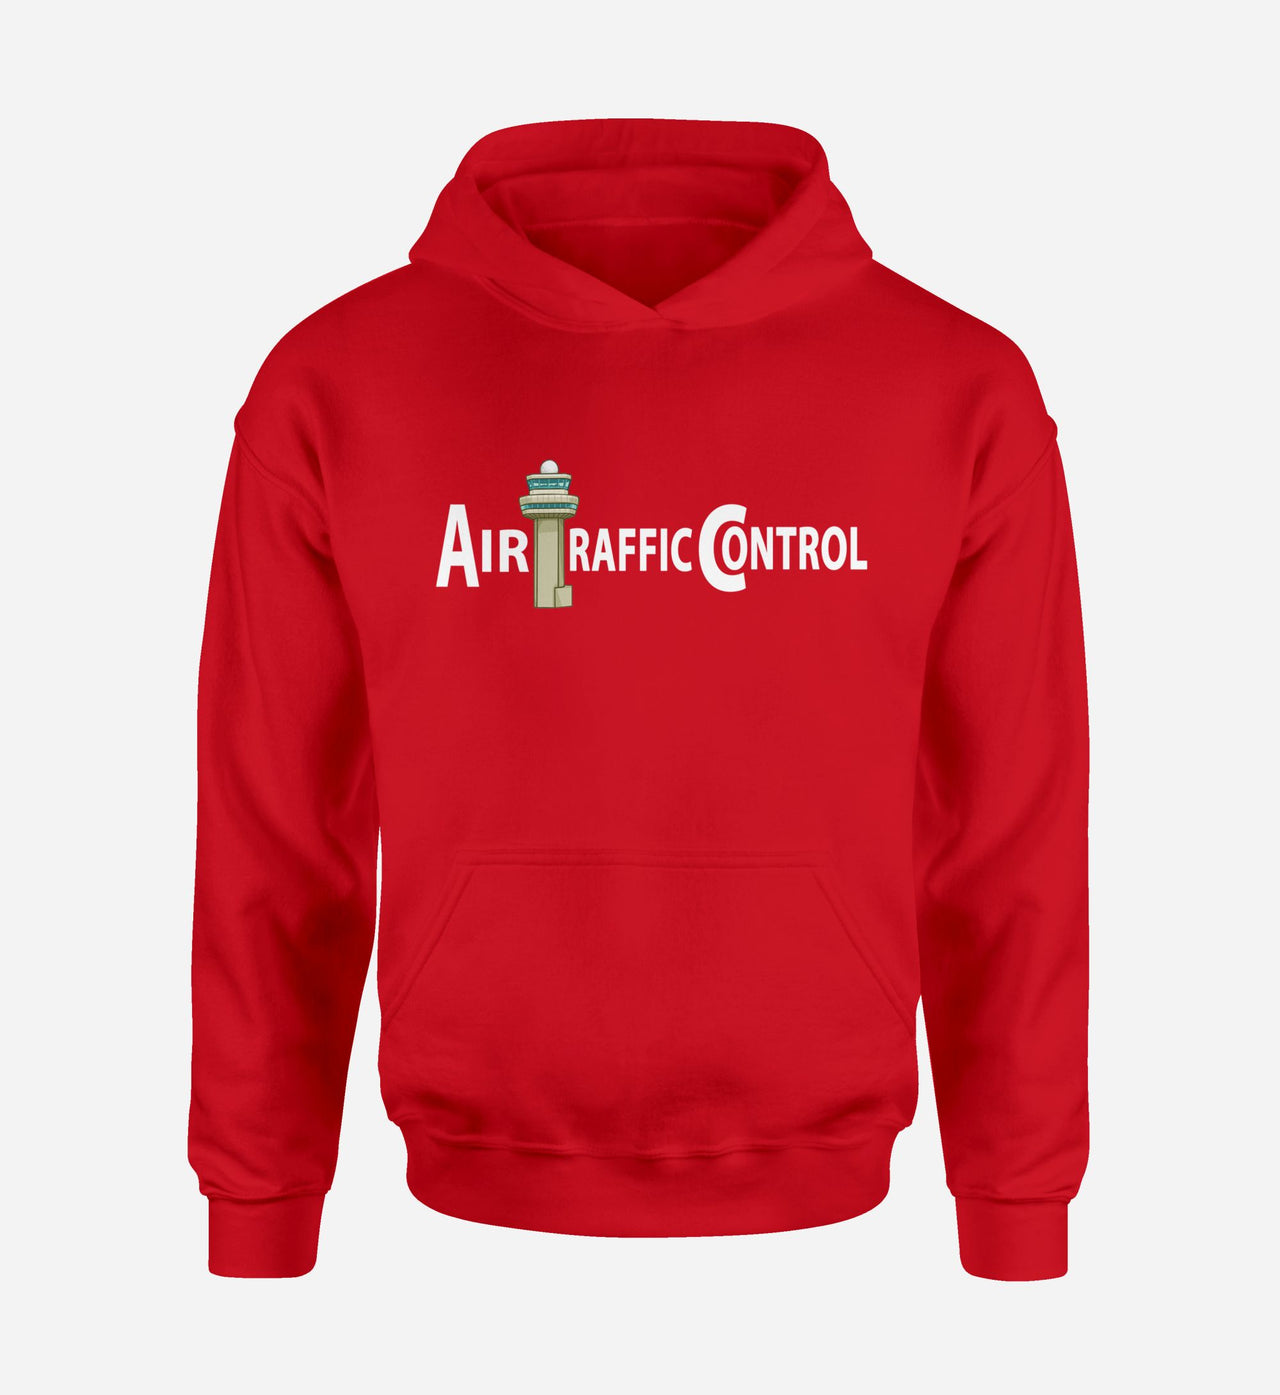 Air Traffic Control Designed Hoodies